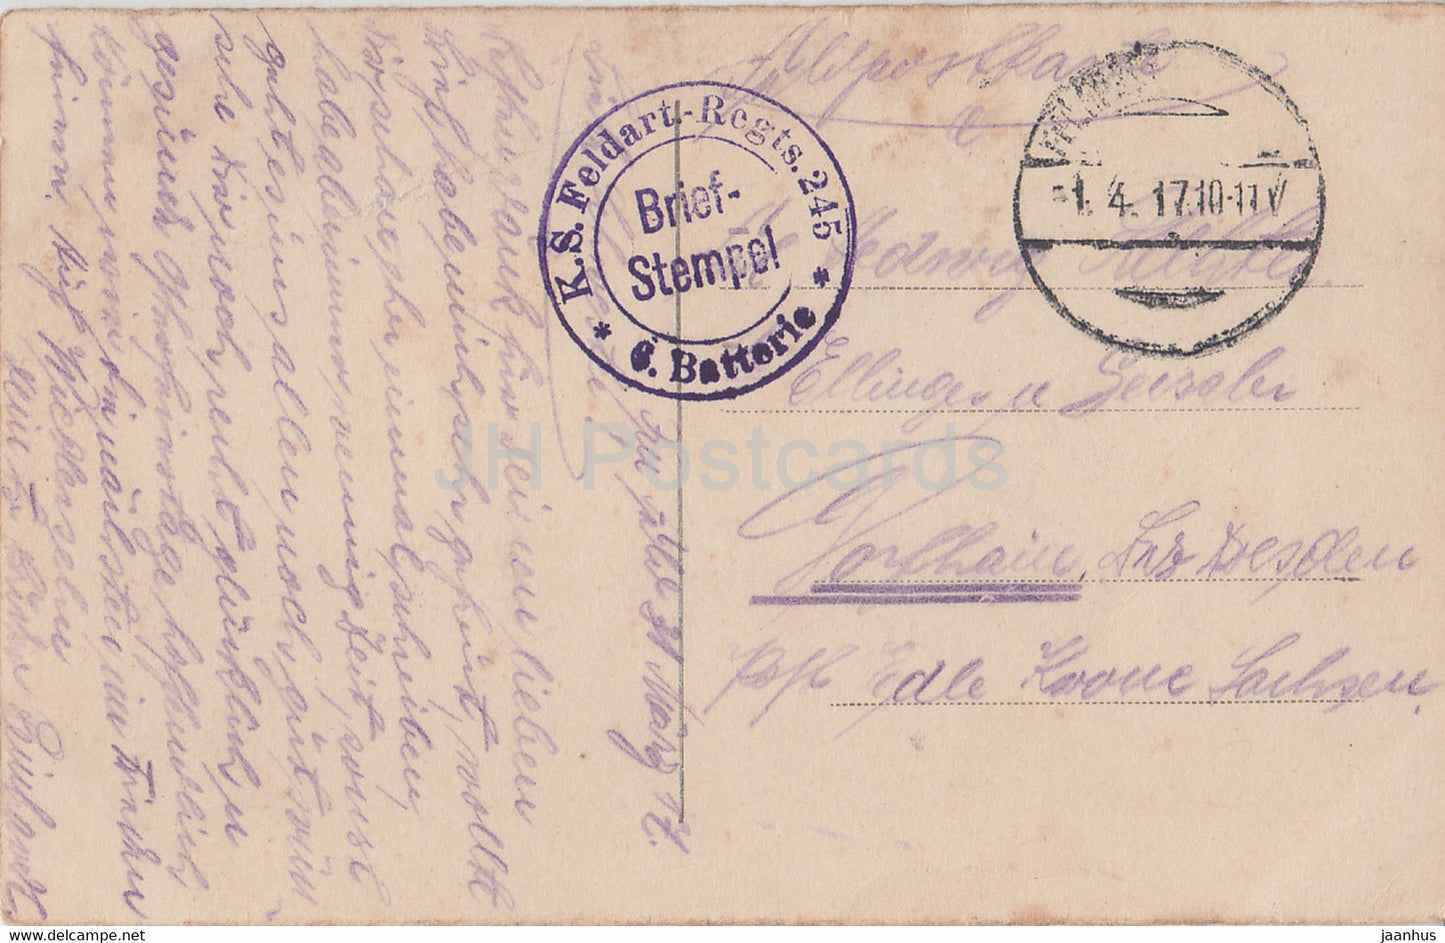 Warschau - Warszawa - Rathaus - Ratusz - hôtel de ville - KS Feldart Regts - Feldpost - carte postale ancienne - 1917 - Pologne - utilisé